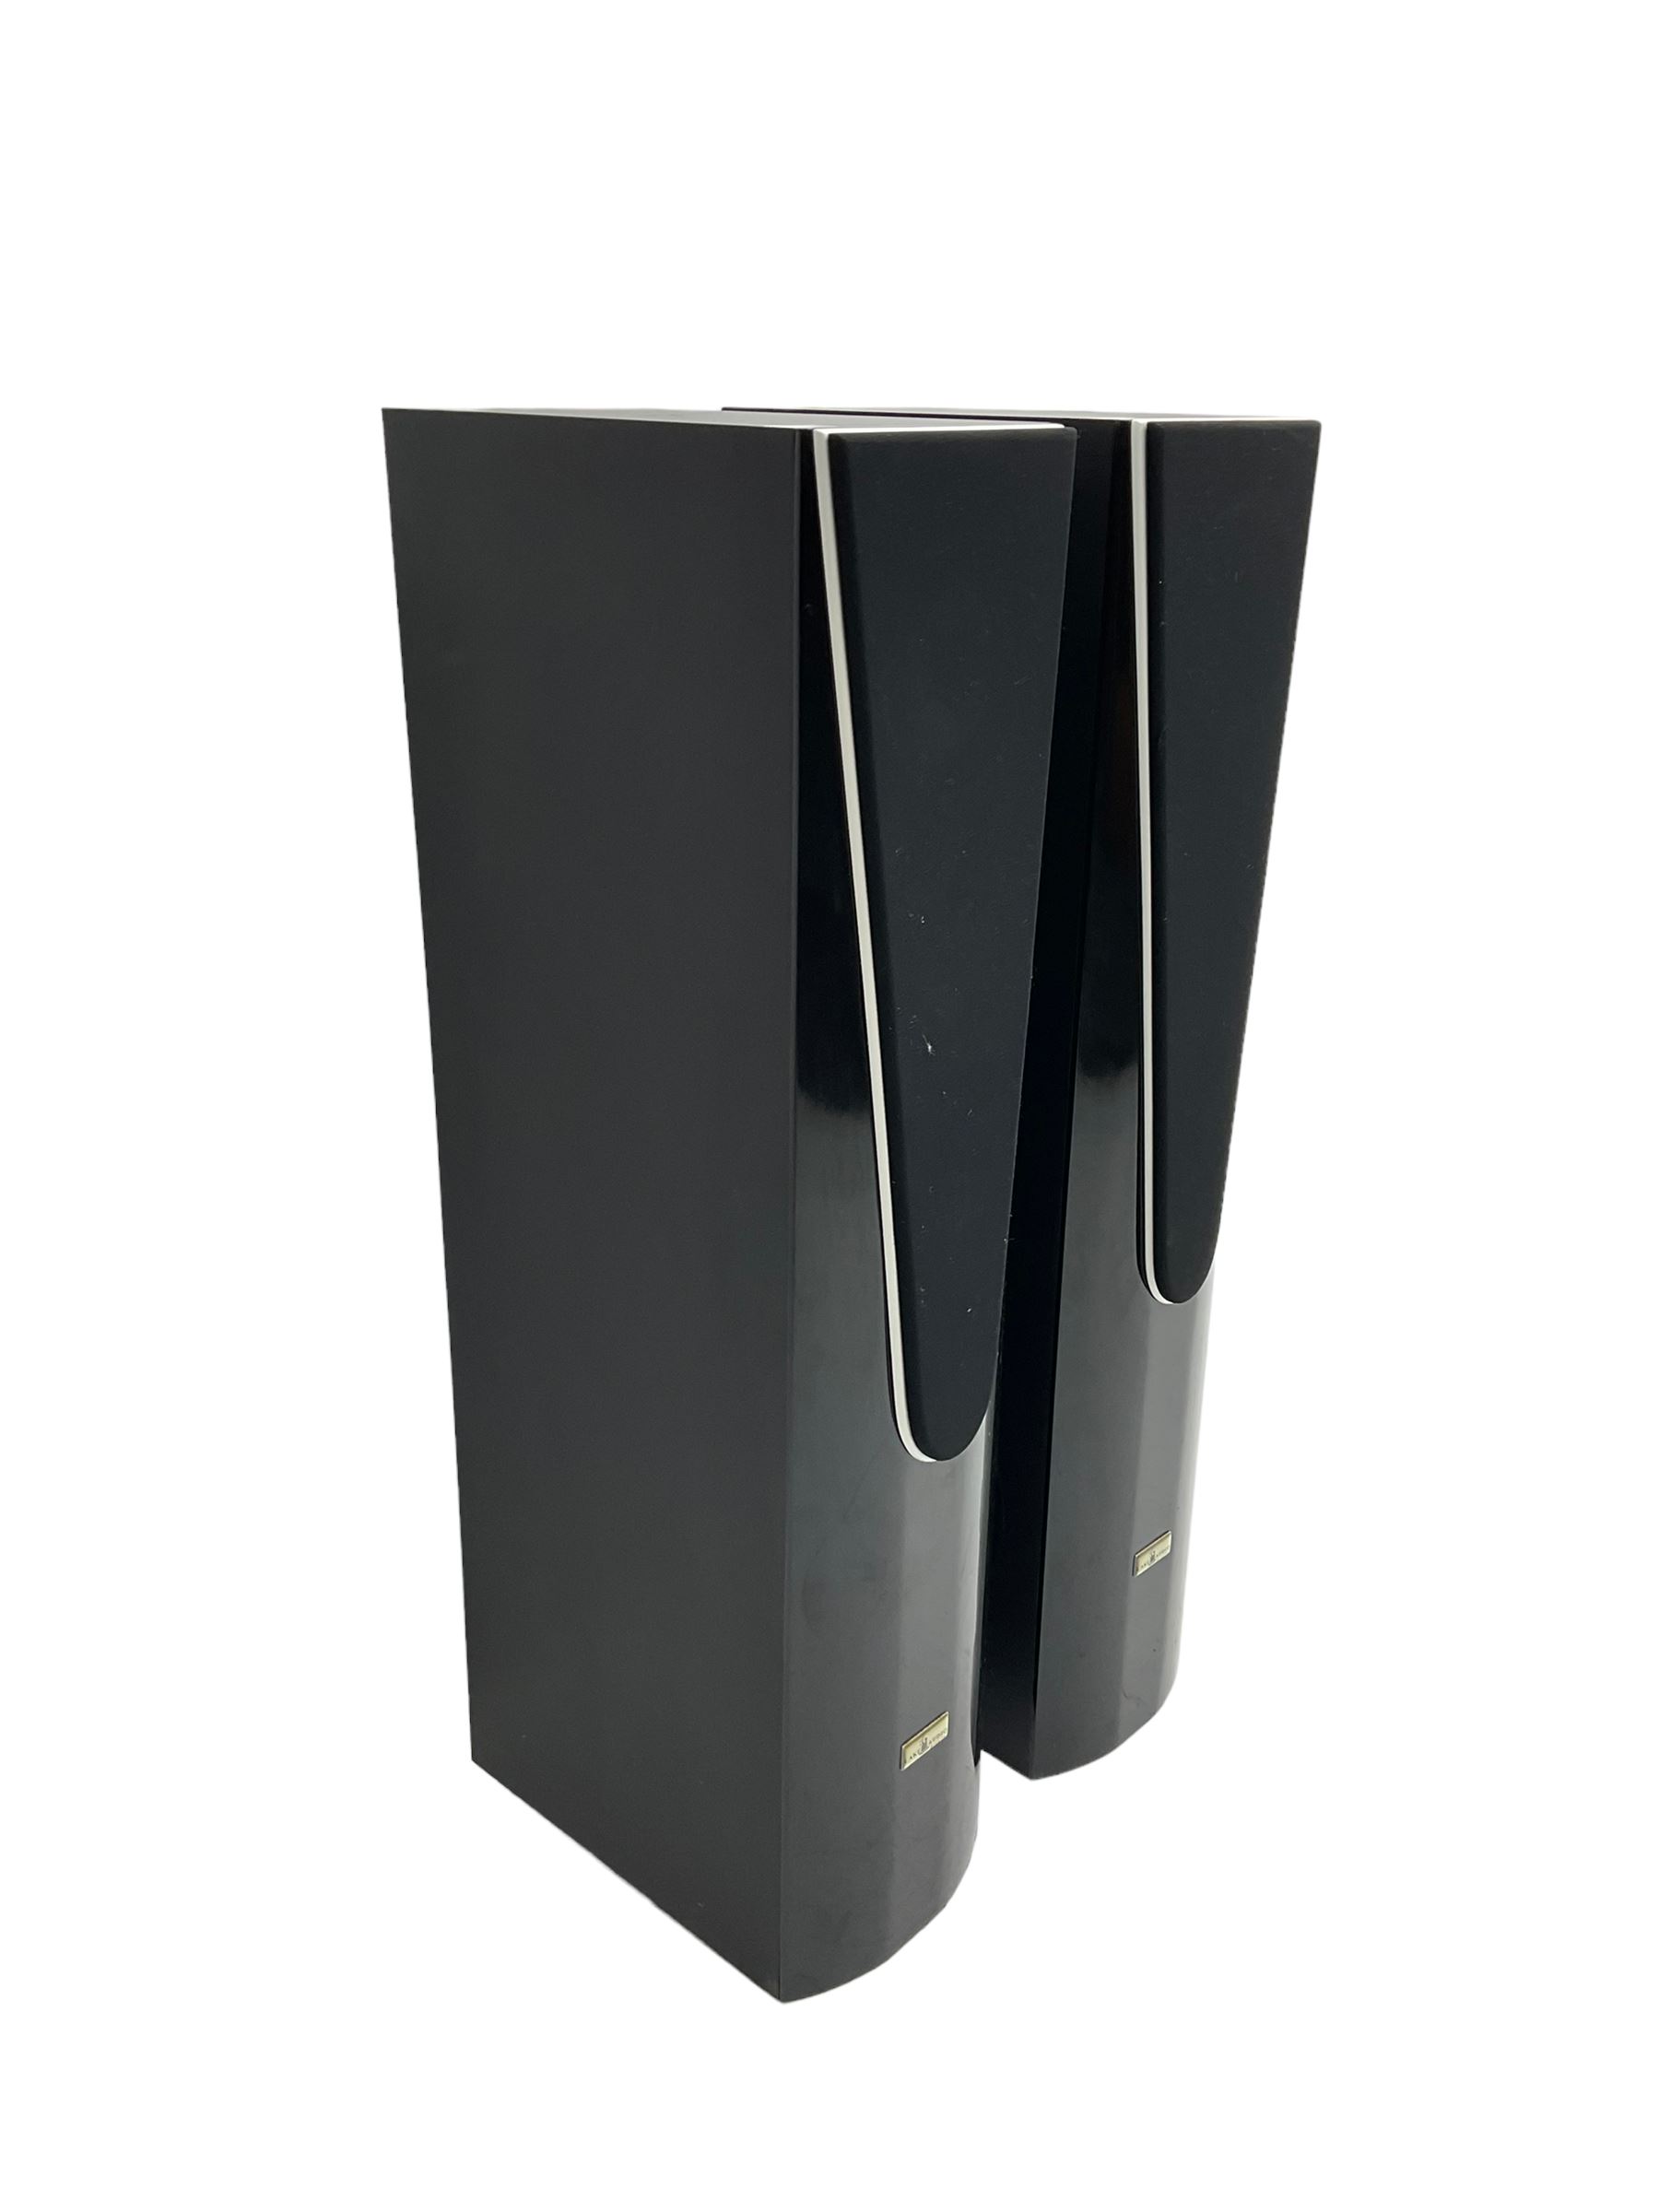 Pair Lake Audio 120W floorstanding speakers in black finish - Image 2 of 5